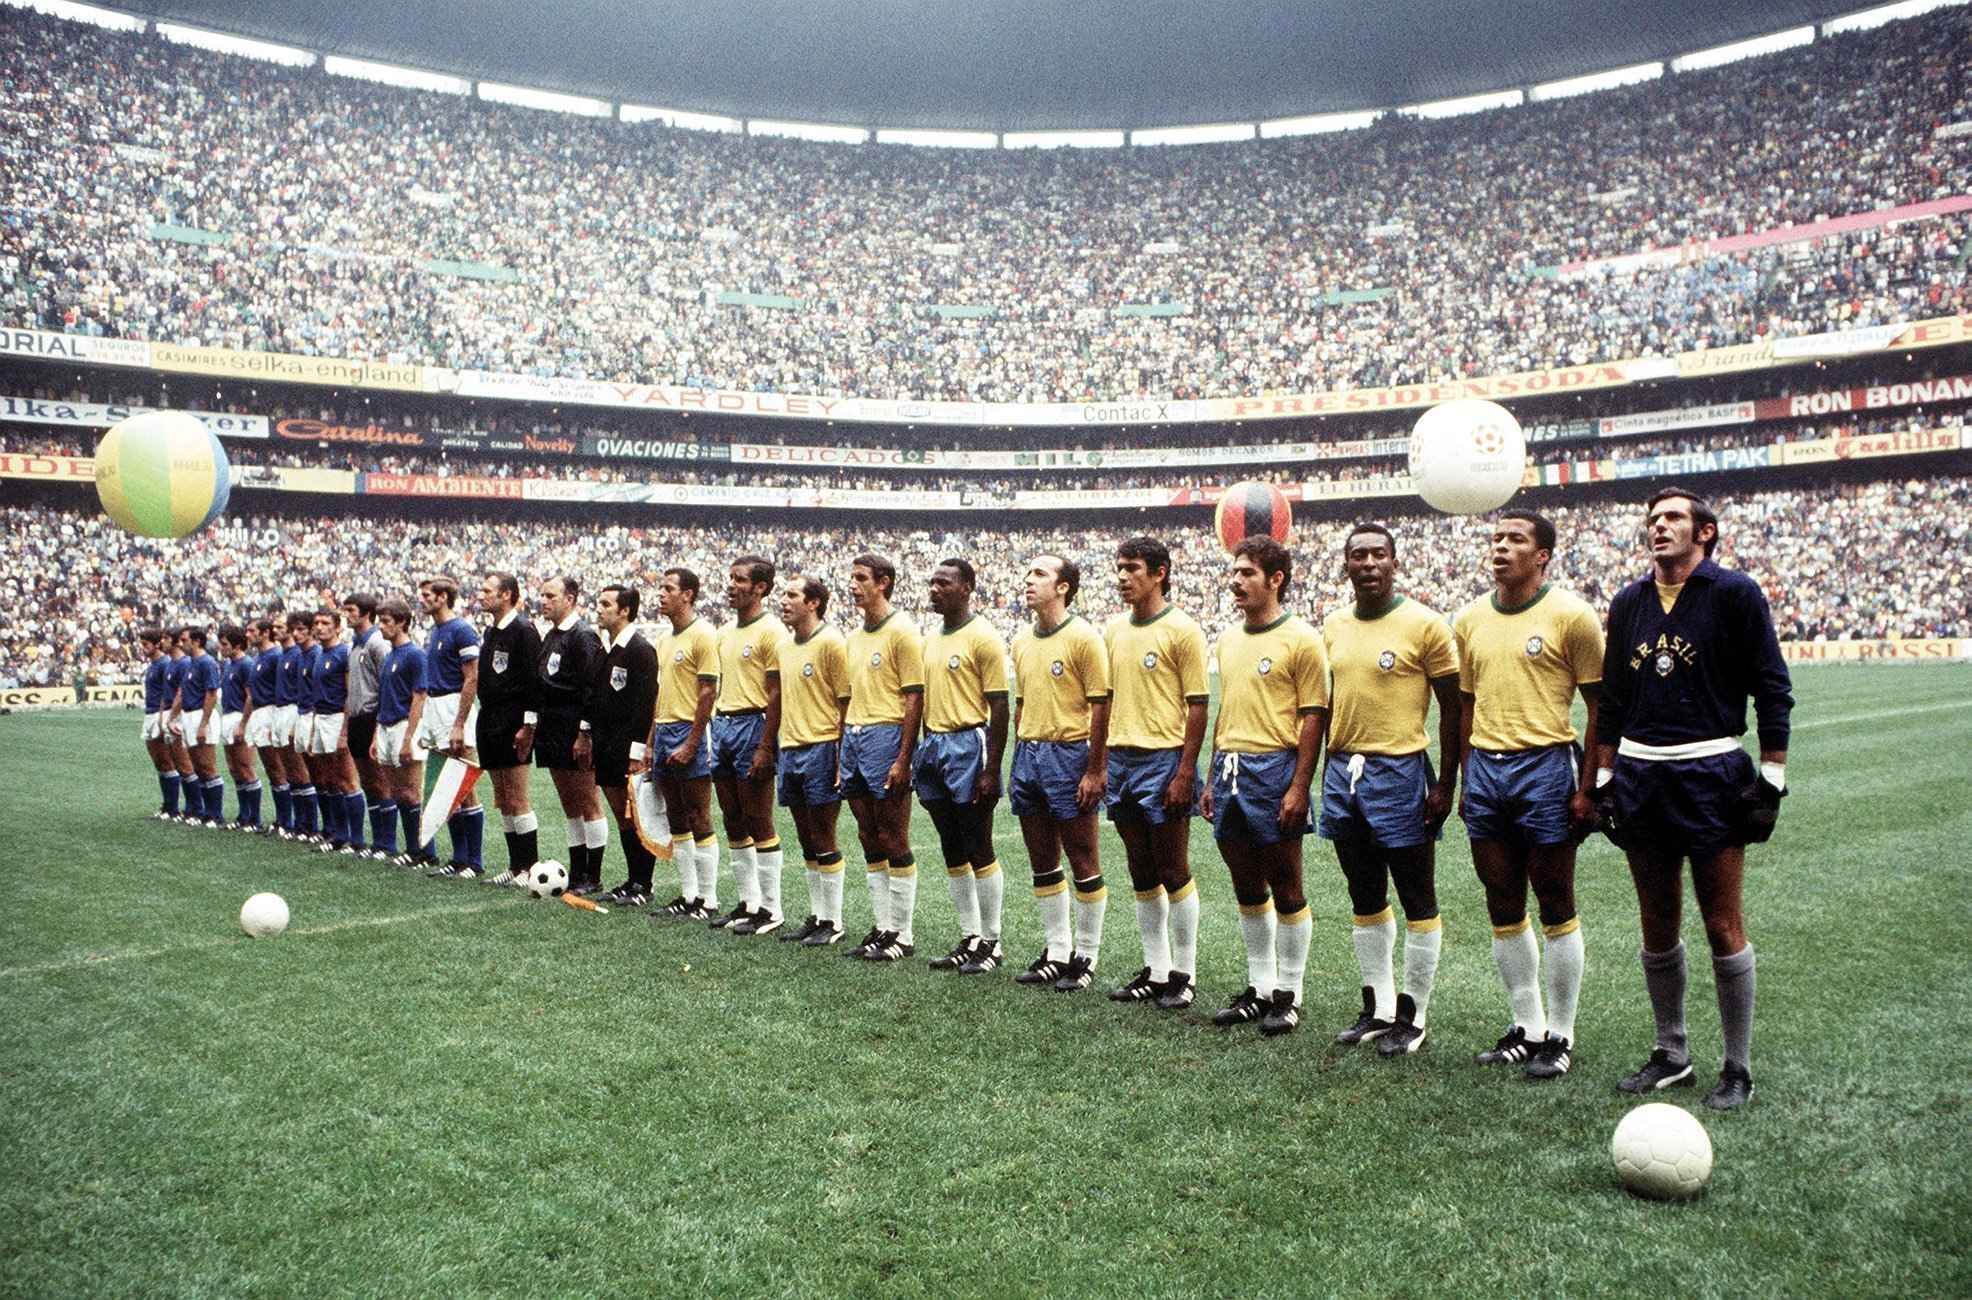 1970 team